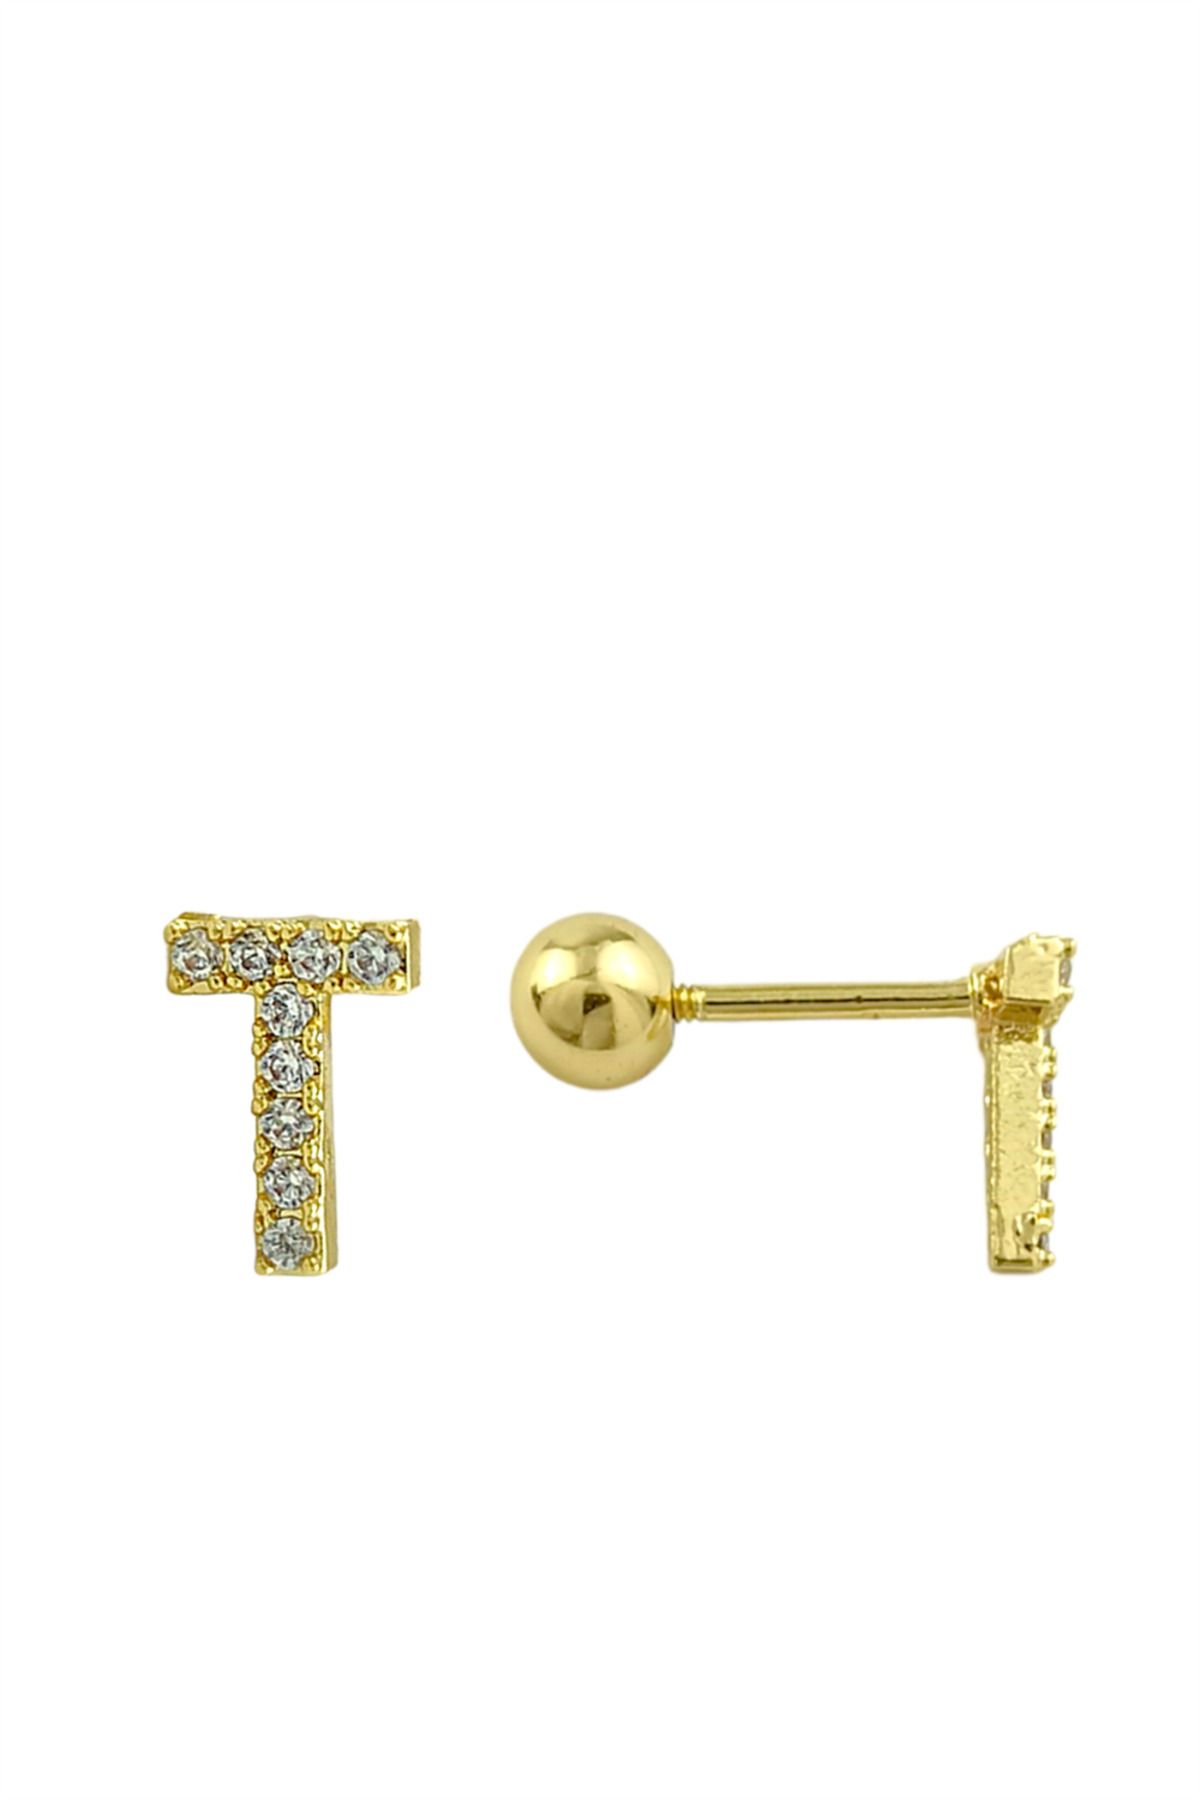 Çlk Accessories Gold Harf Piercing - T HarfPiercing